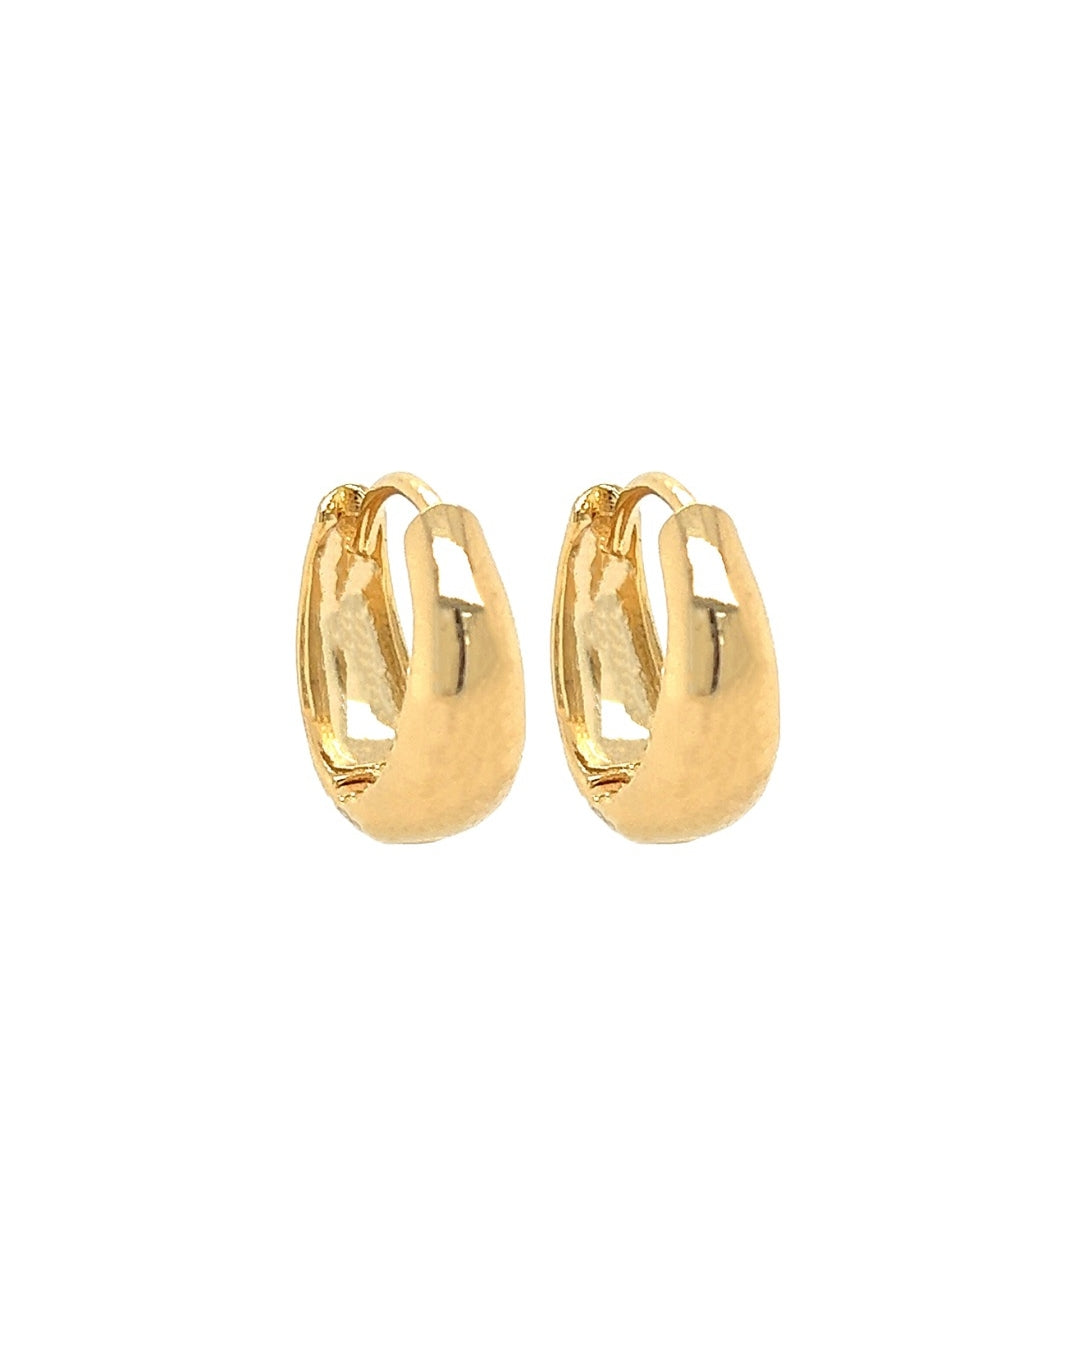 Gold chunky dome Huggie hoops earrings